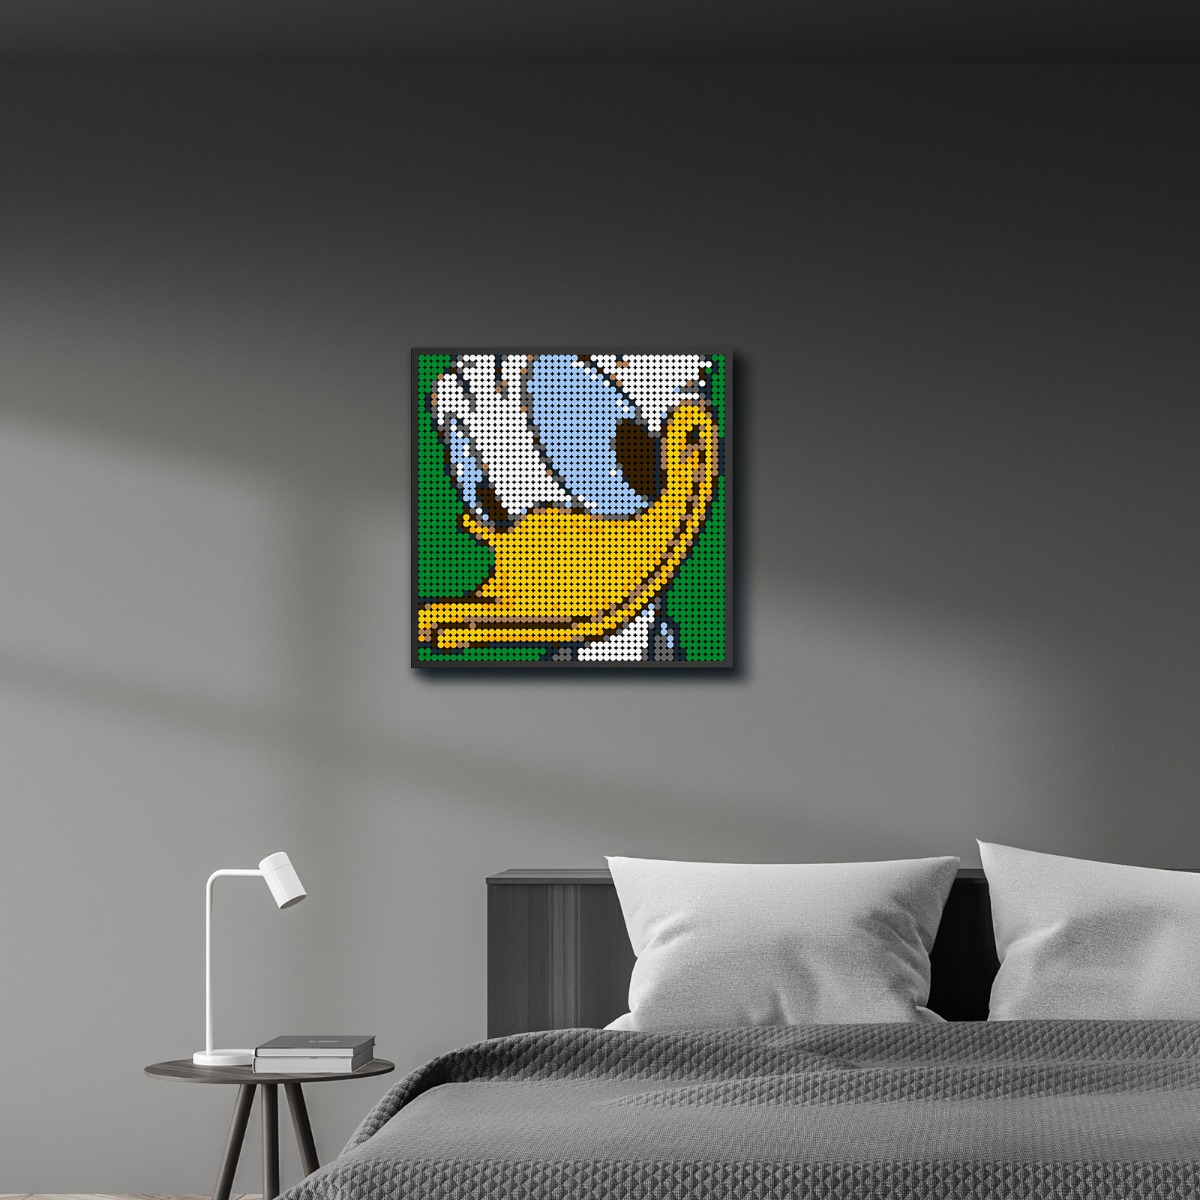 moc 90151 donald duck pixel art movie moc factory 213845 - LEPIN Germany